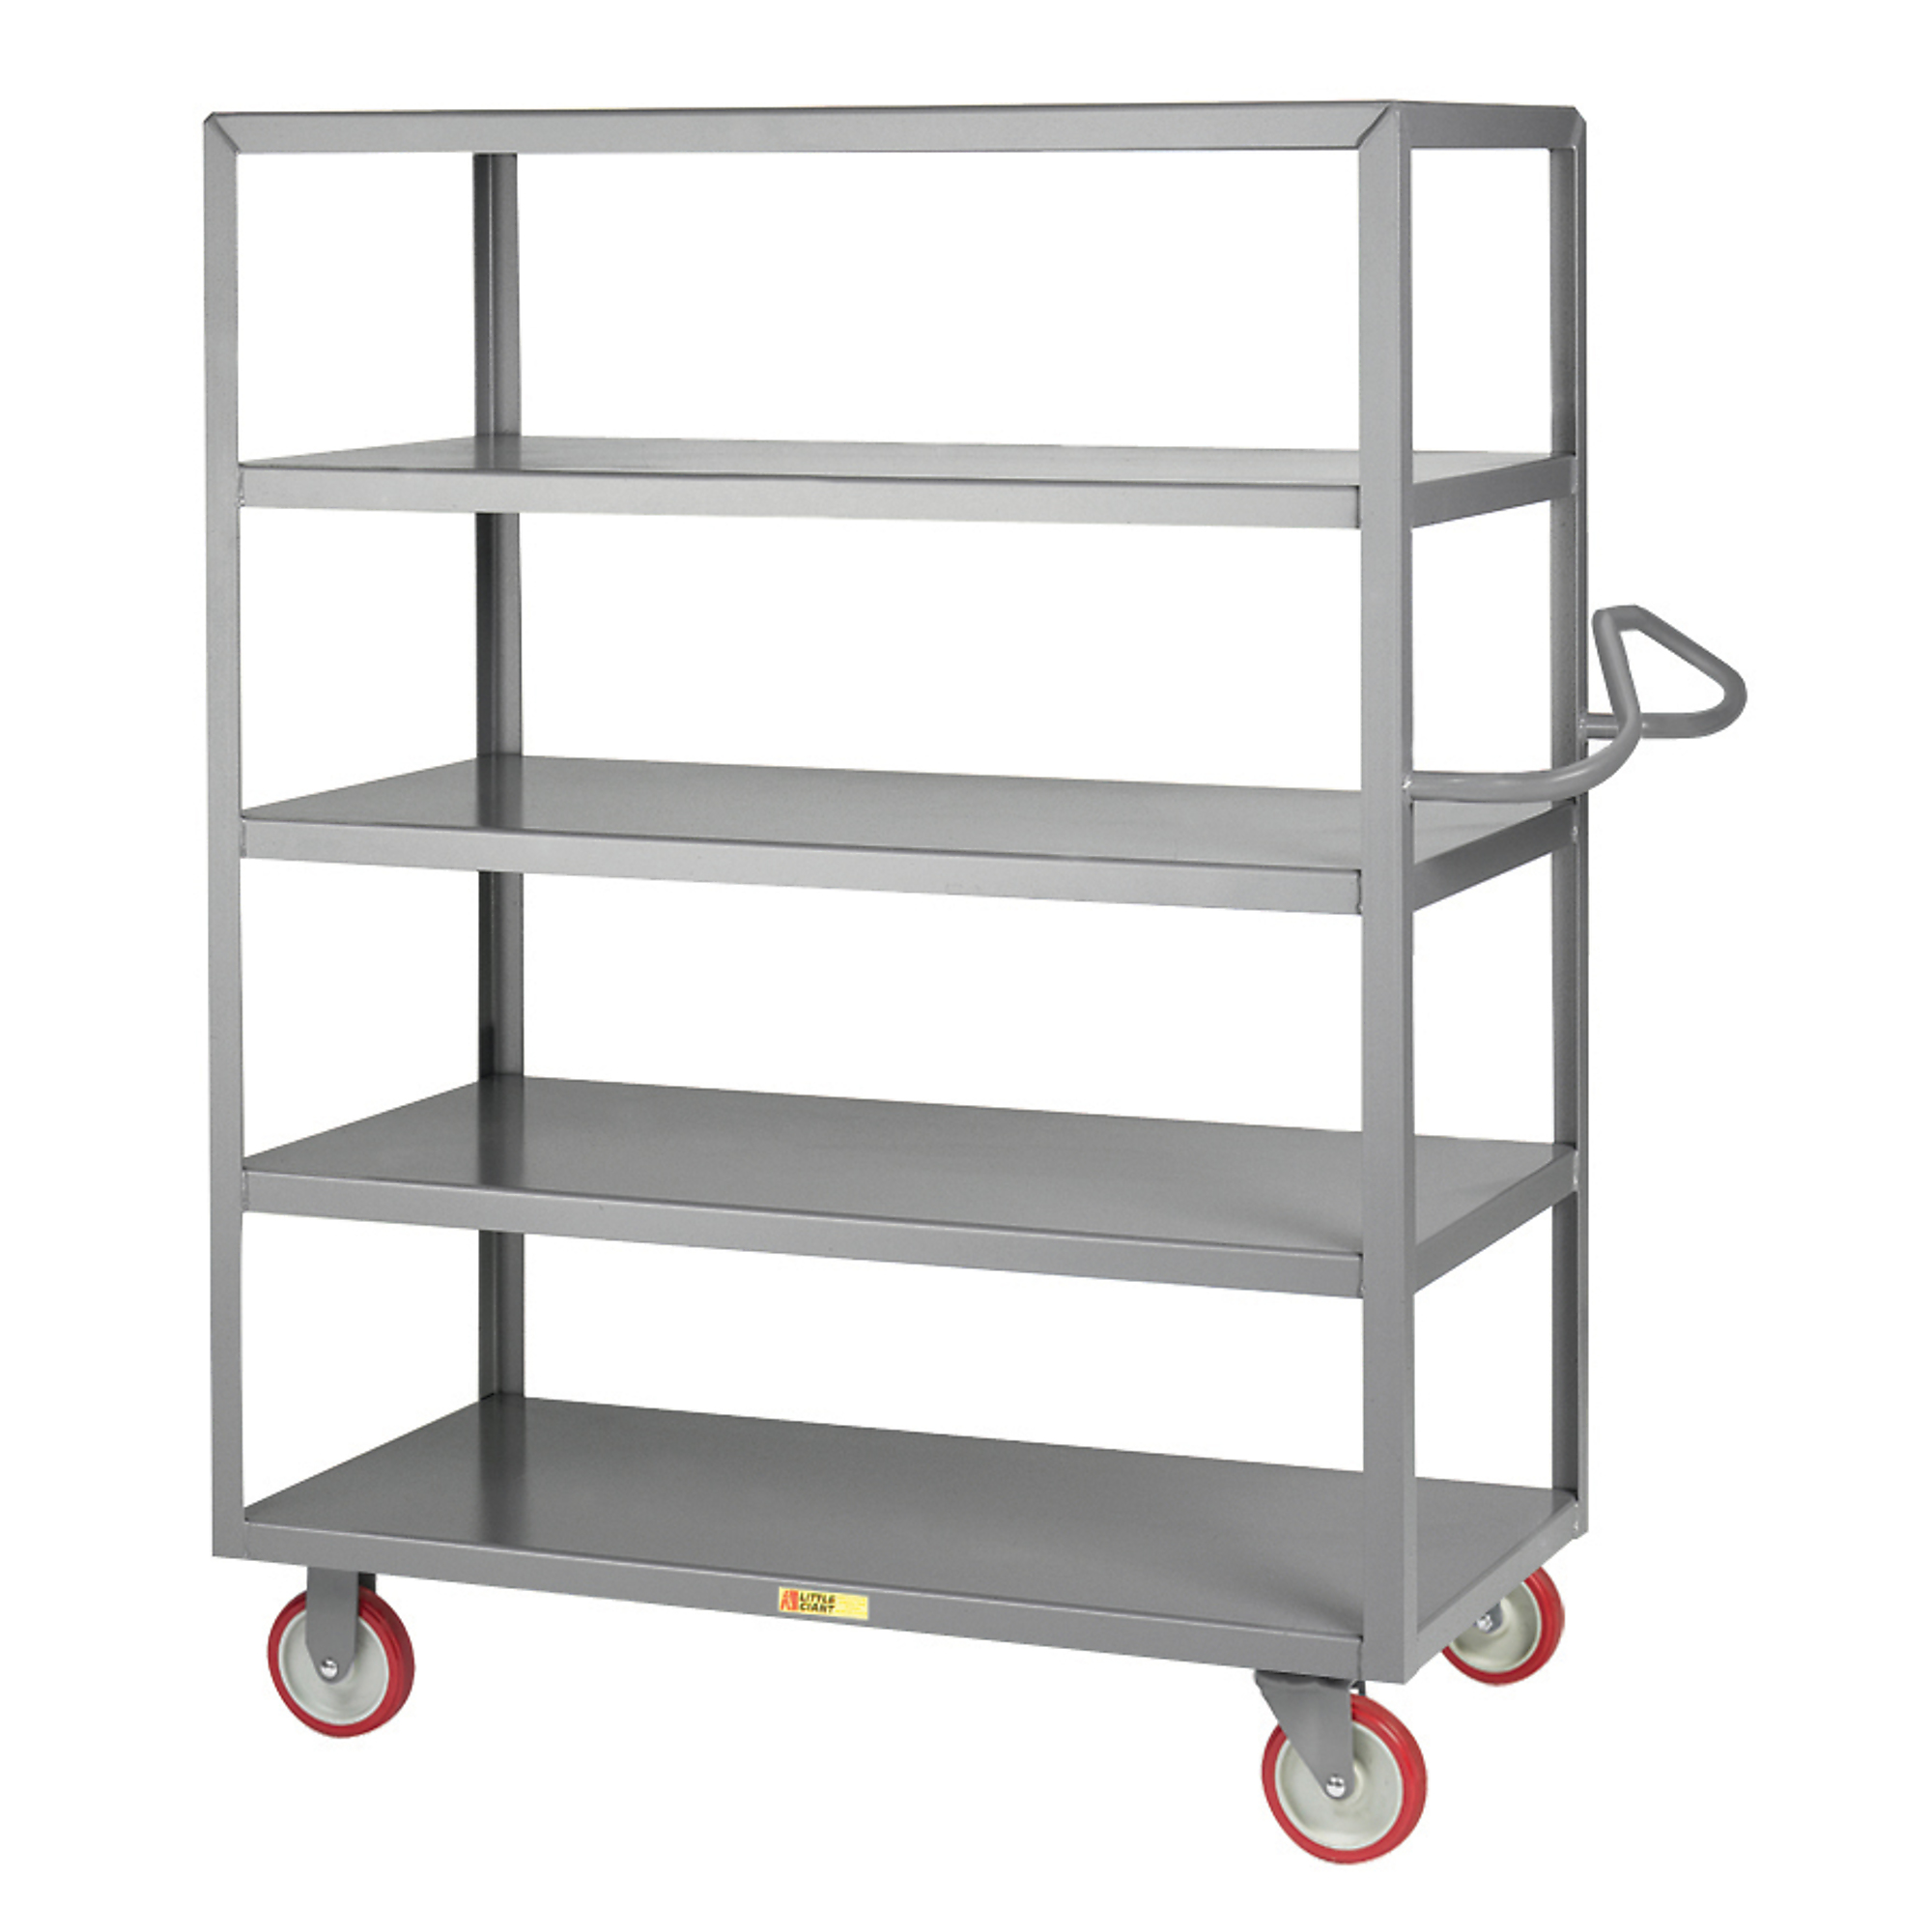 Little Giant, 5-Shelf Service Cart, Ergo Handle, 24x48, 1200 lbs, Total Capacity 1200 lb, Shelves (qty.) 5, Material Carbon Steel, Model 5ENM-2448-5PY